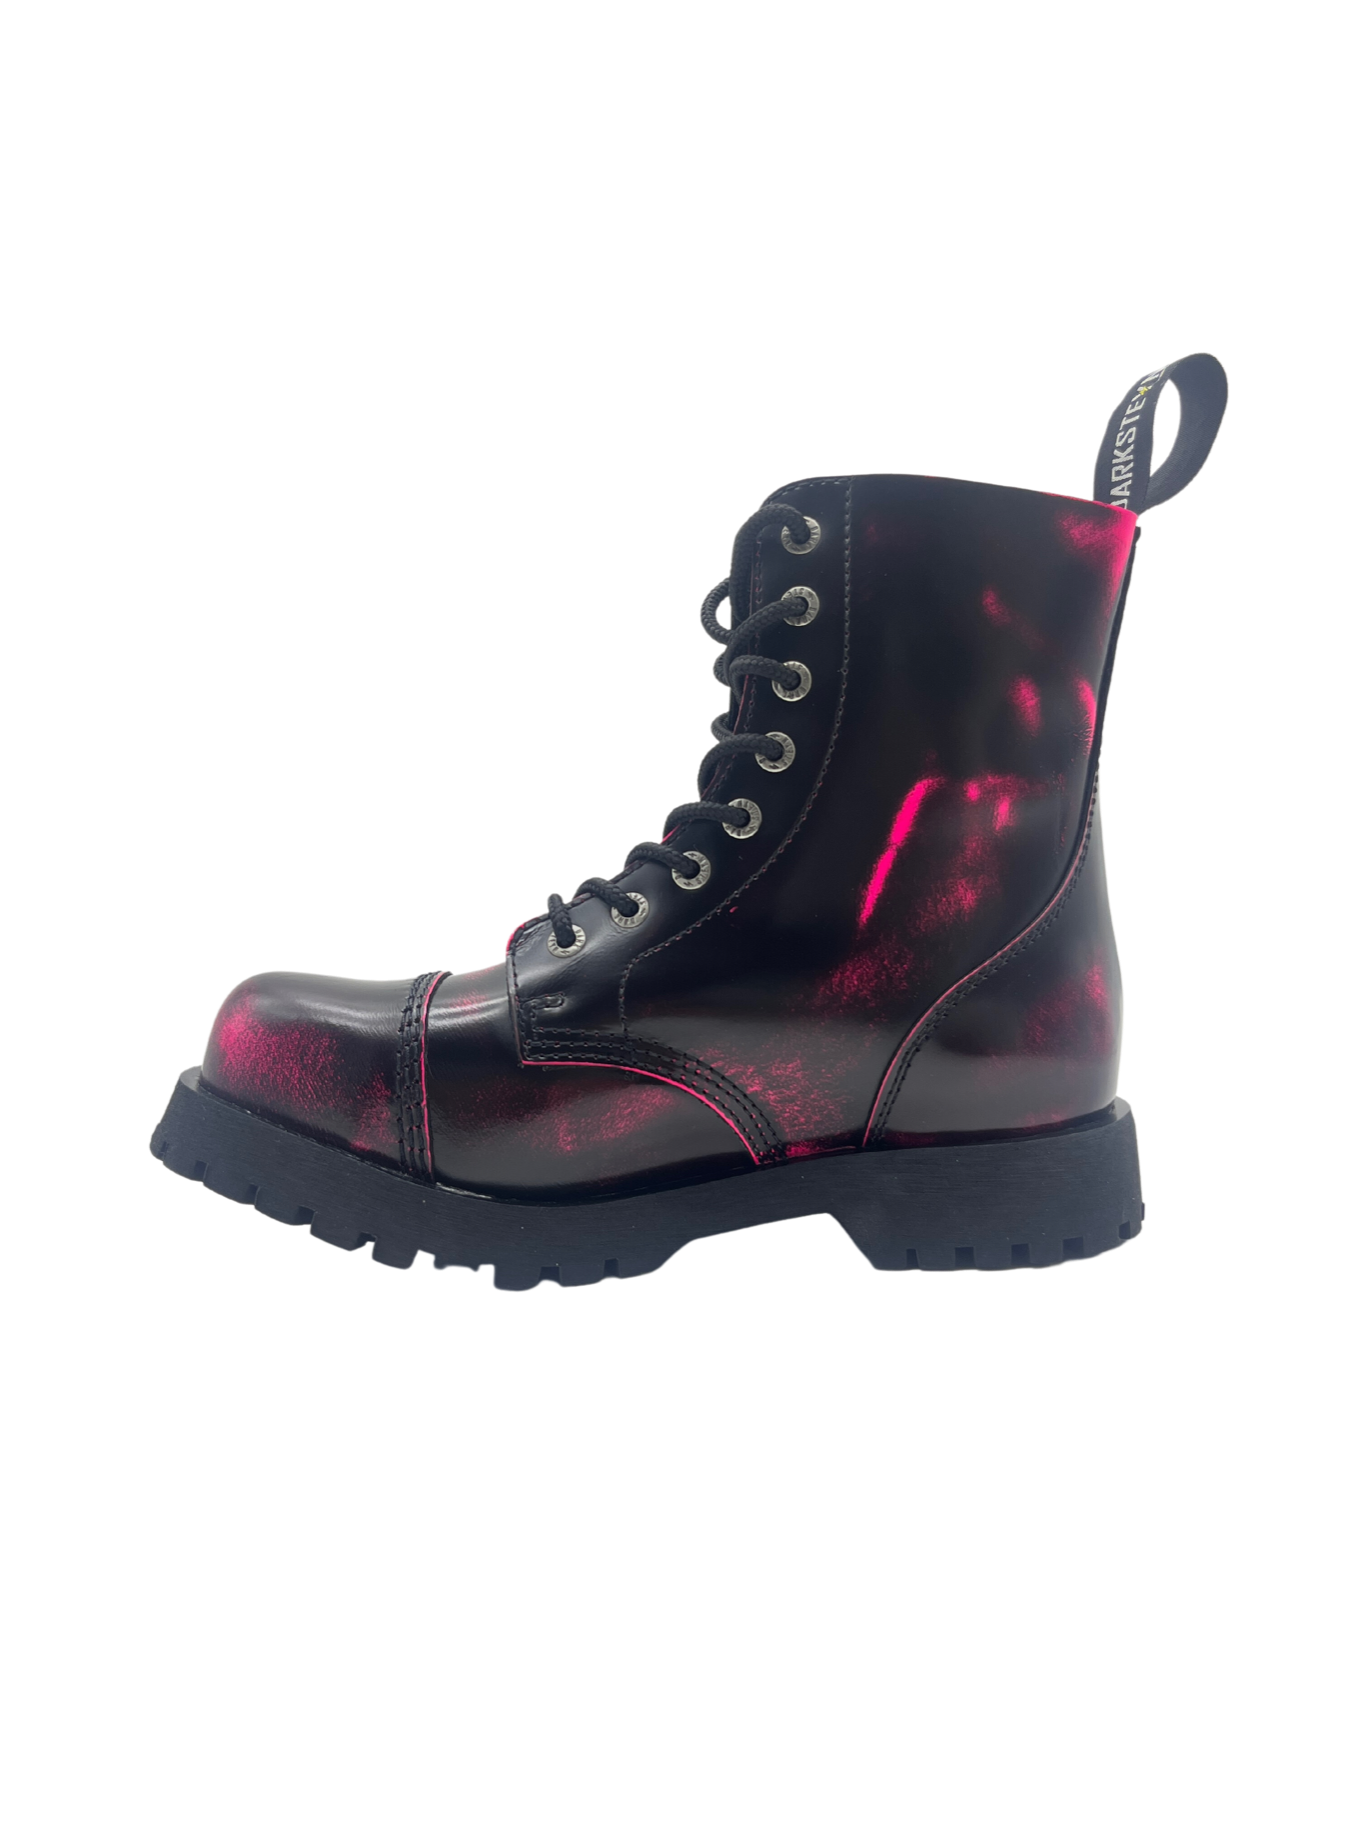 Darksteyn Boots Shoes 8 Eye Ranger Premium Boots Pink Pink